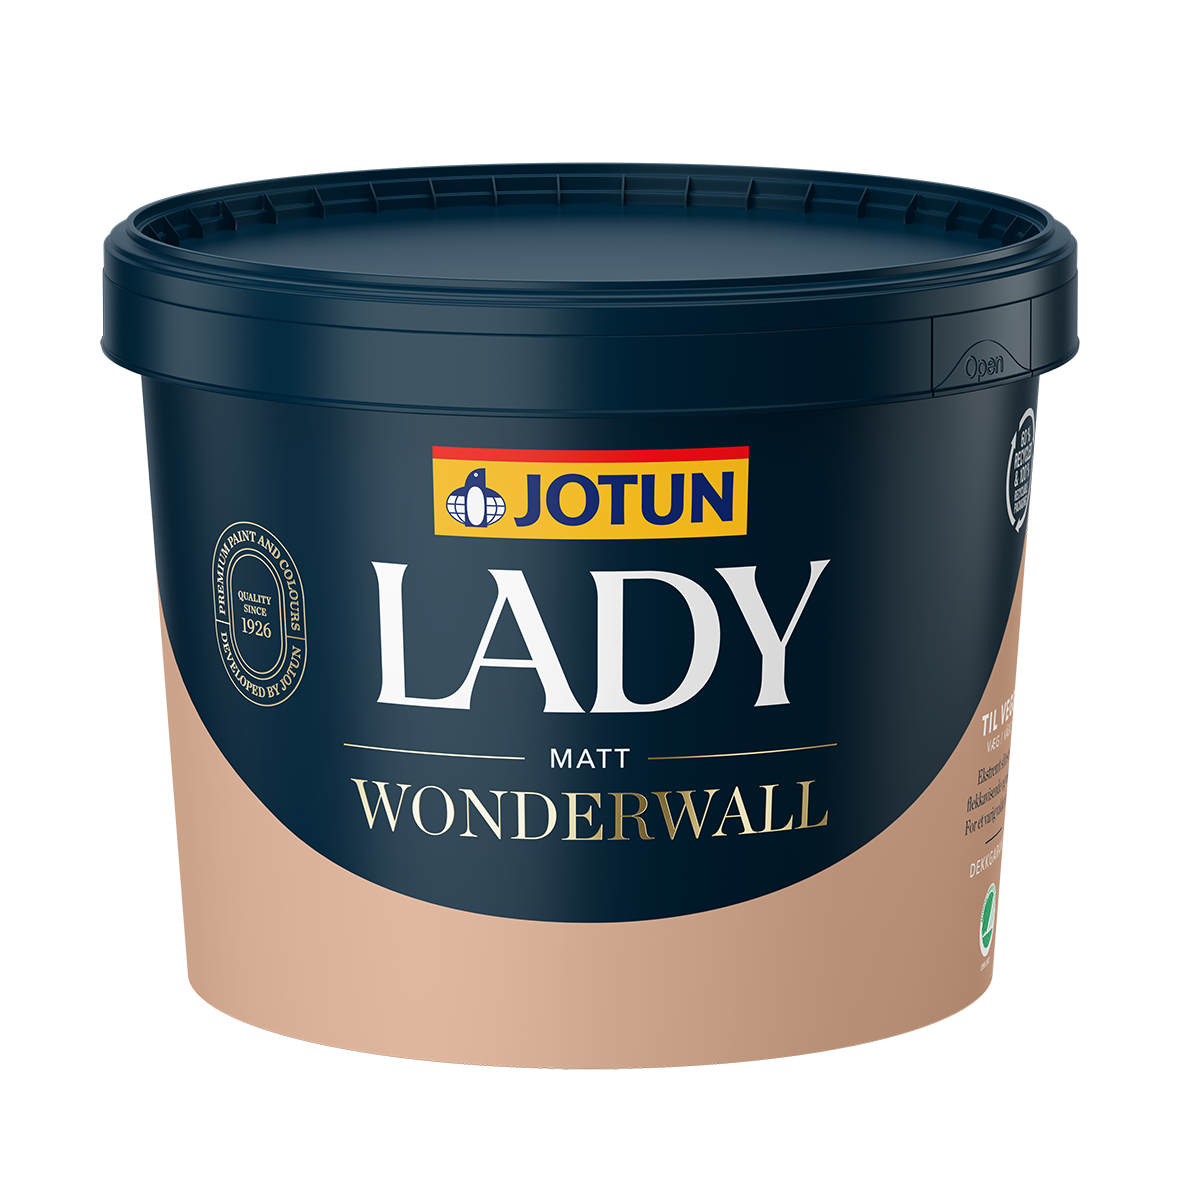 LADY Wonderwall